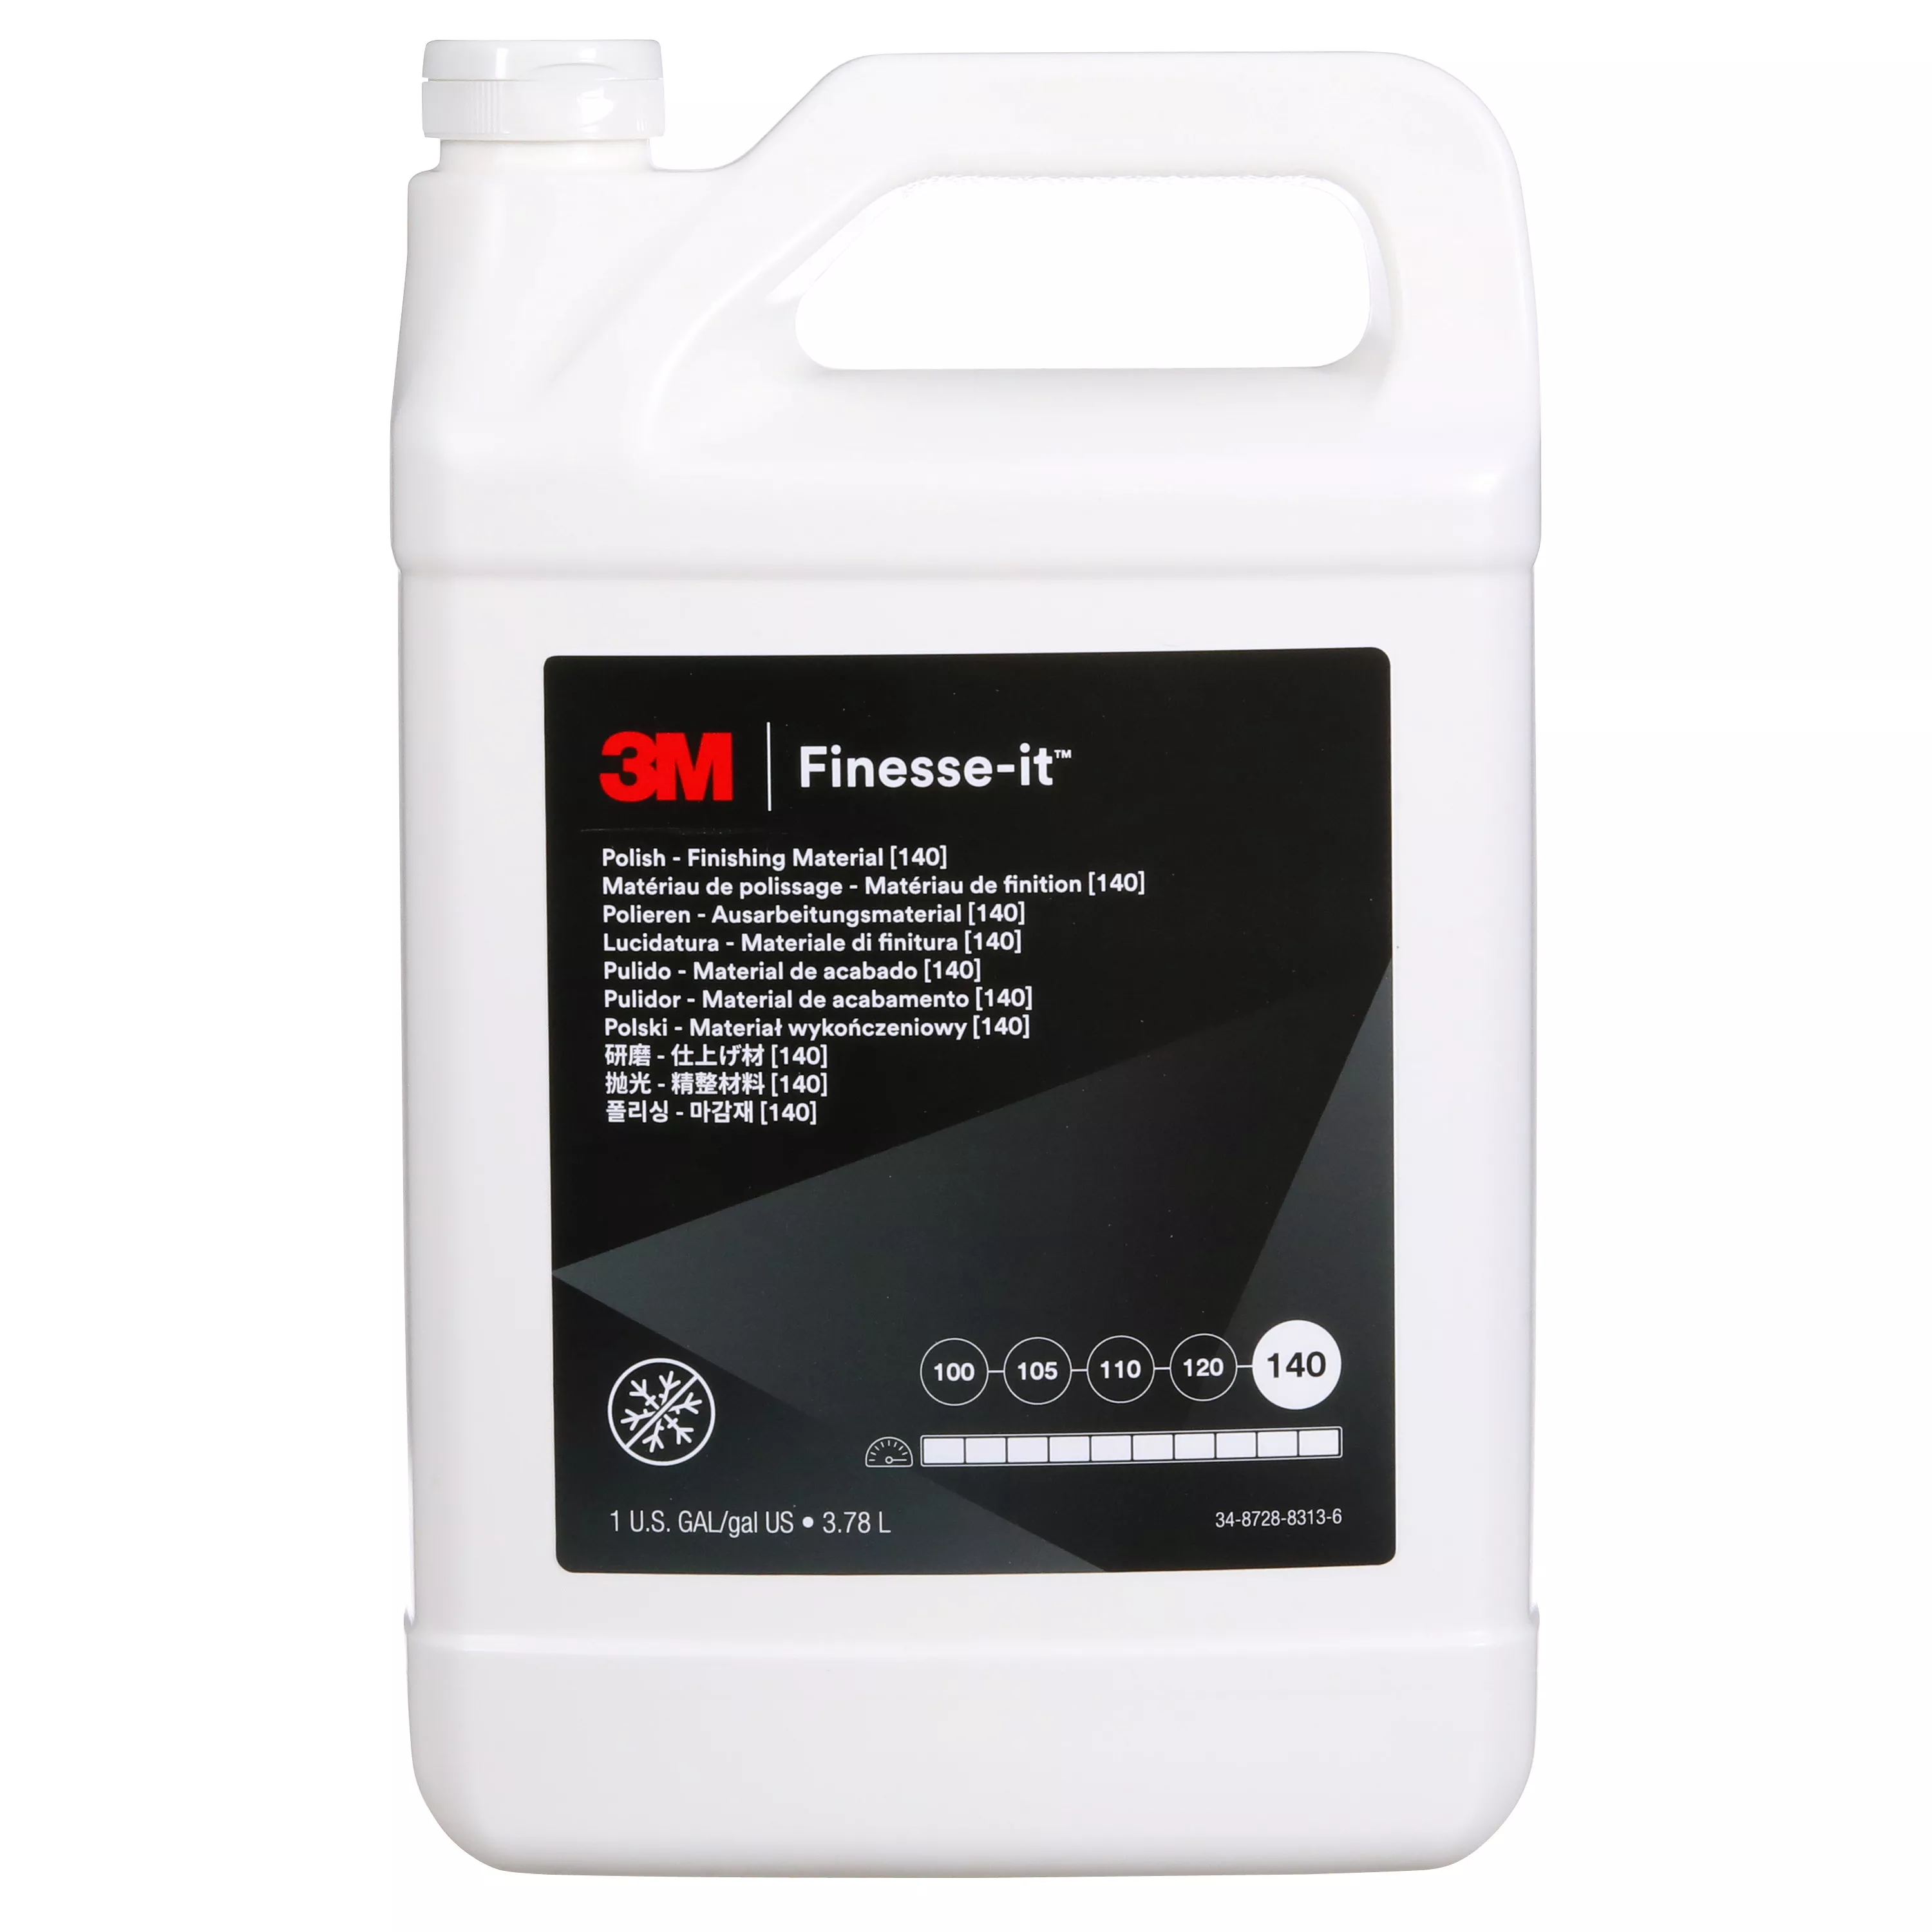 3M™ Finesse-it™ Polish Standard Series - Finishing Material (140),
81820, White, 1 Gallon (3.785 Liter), 4 ea/Case